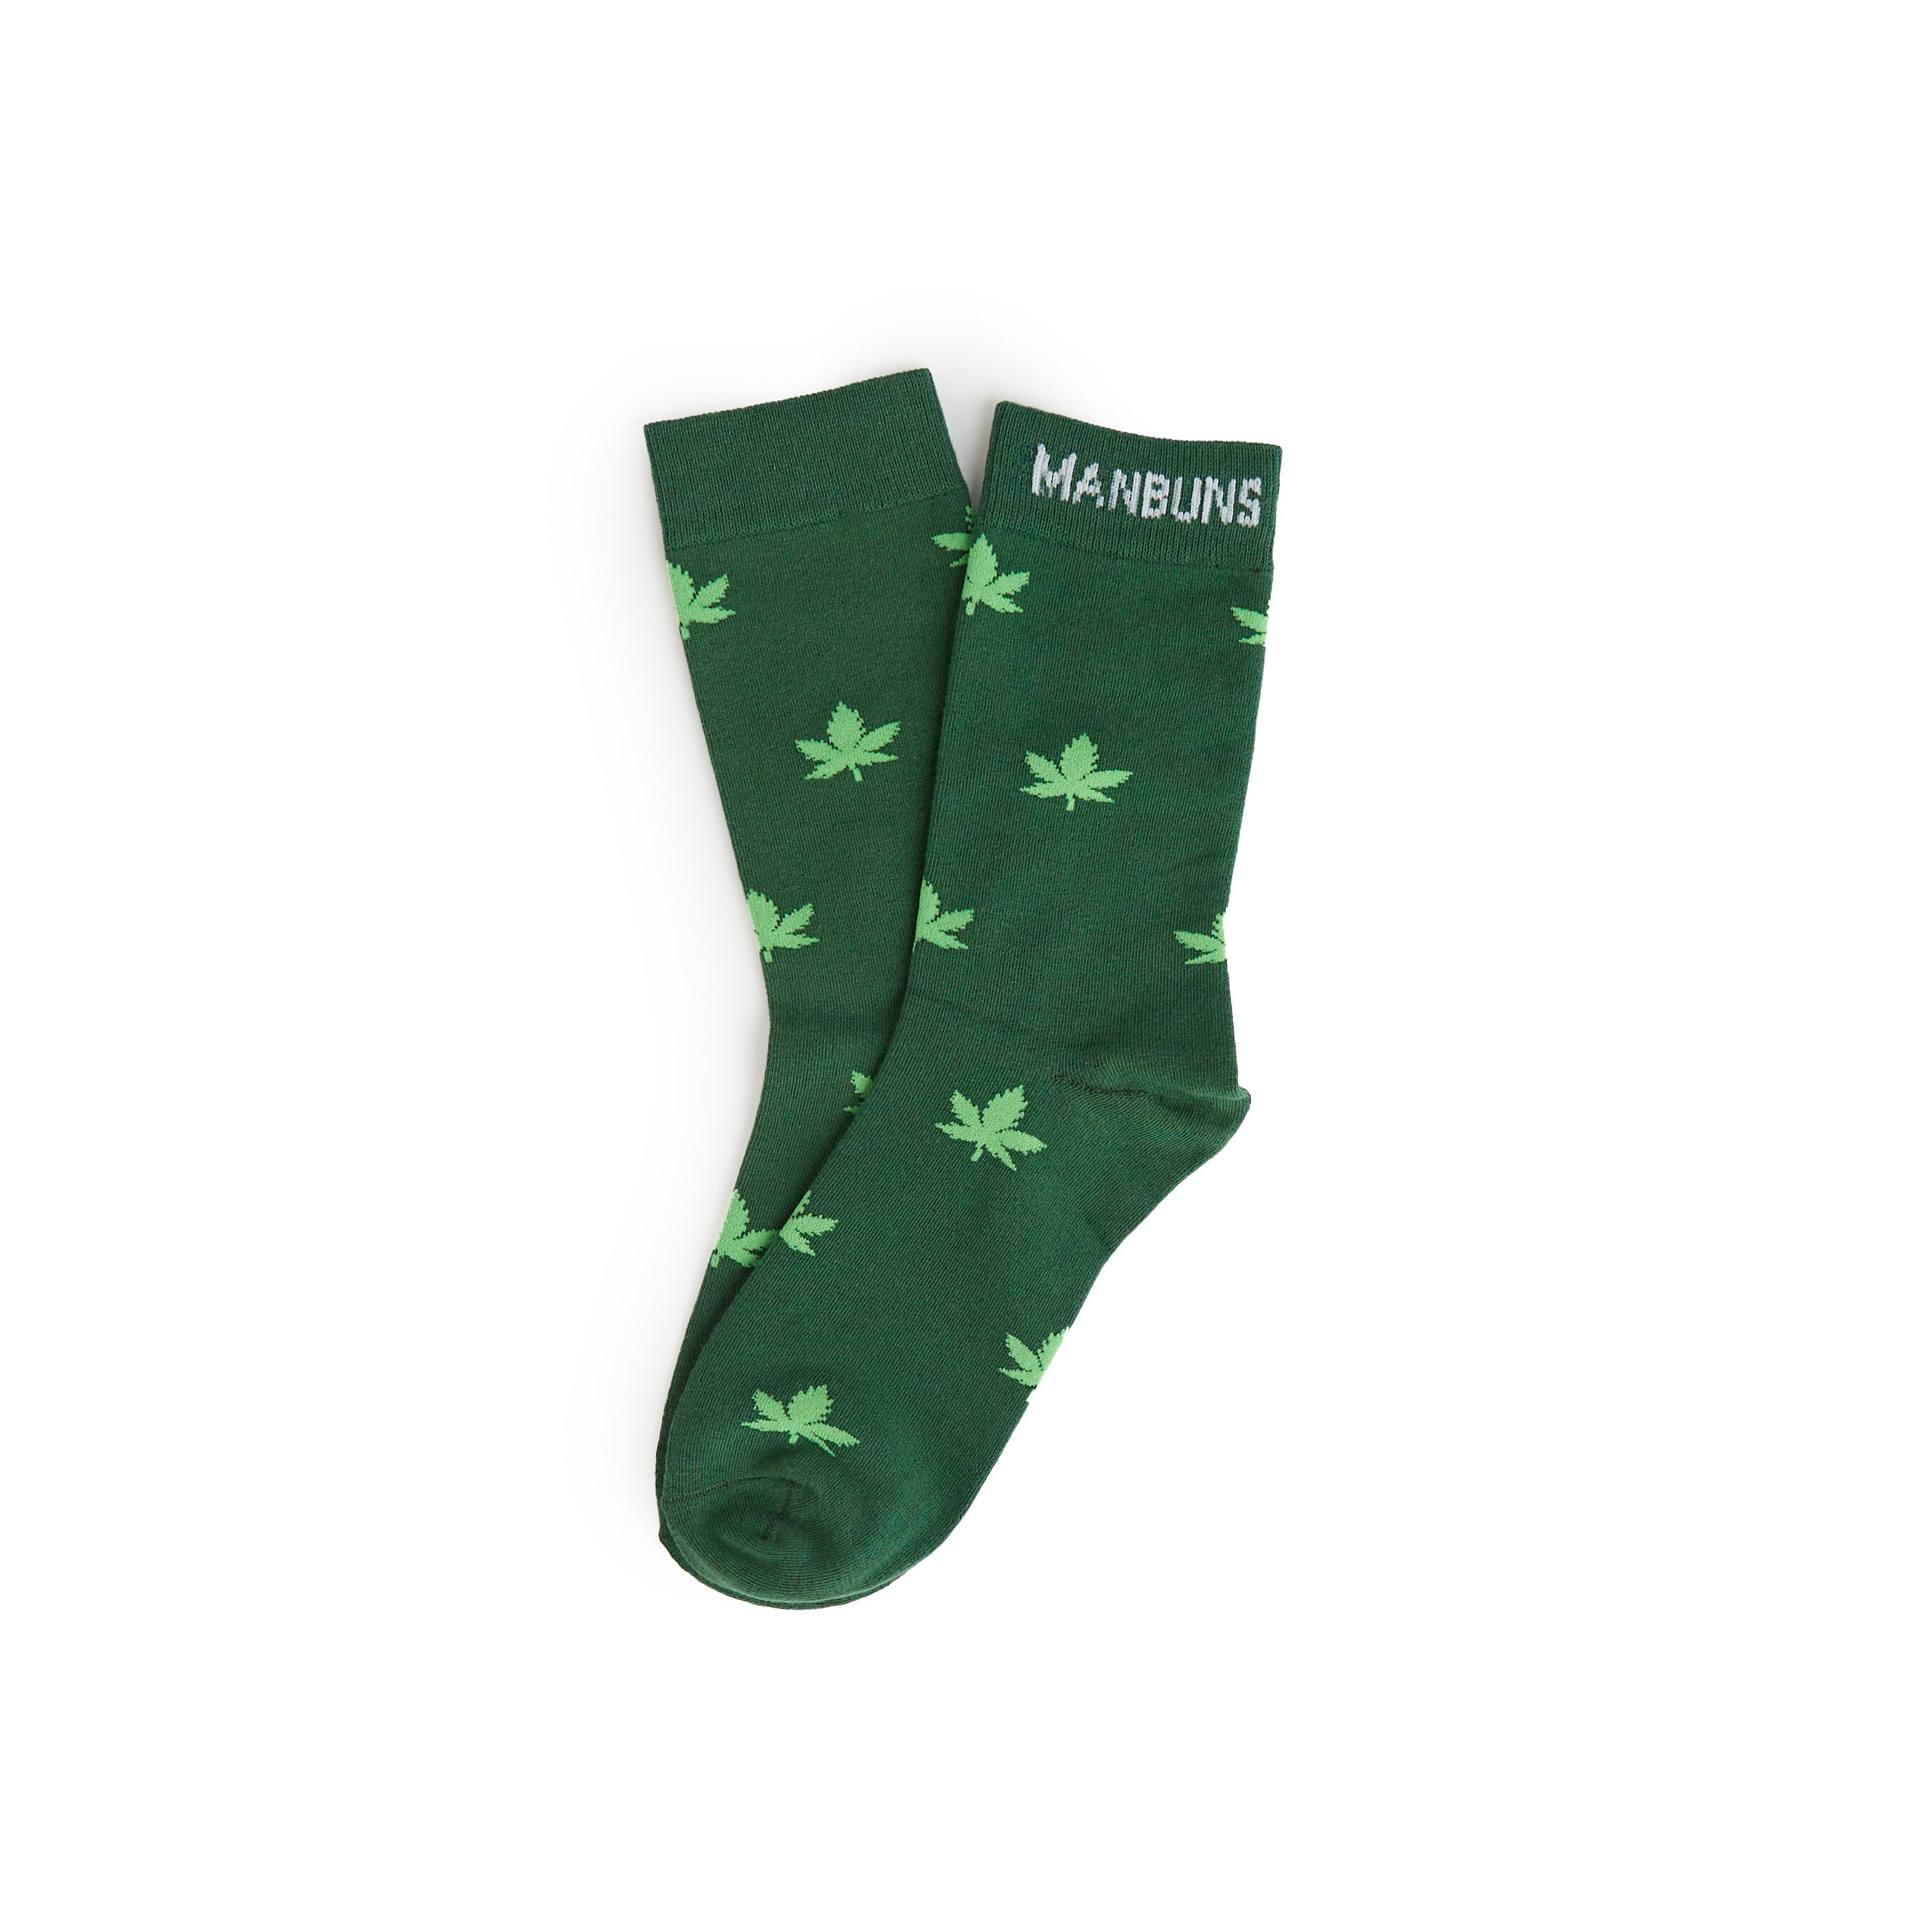 Hemp Natural Organic Socks Size 3-6 UK 36-39 EU Cannabis Leaf on the label 